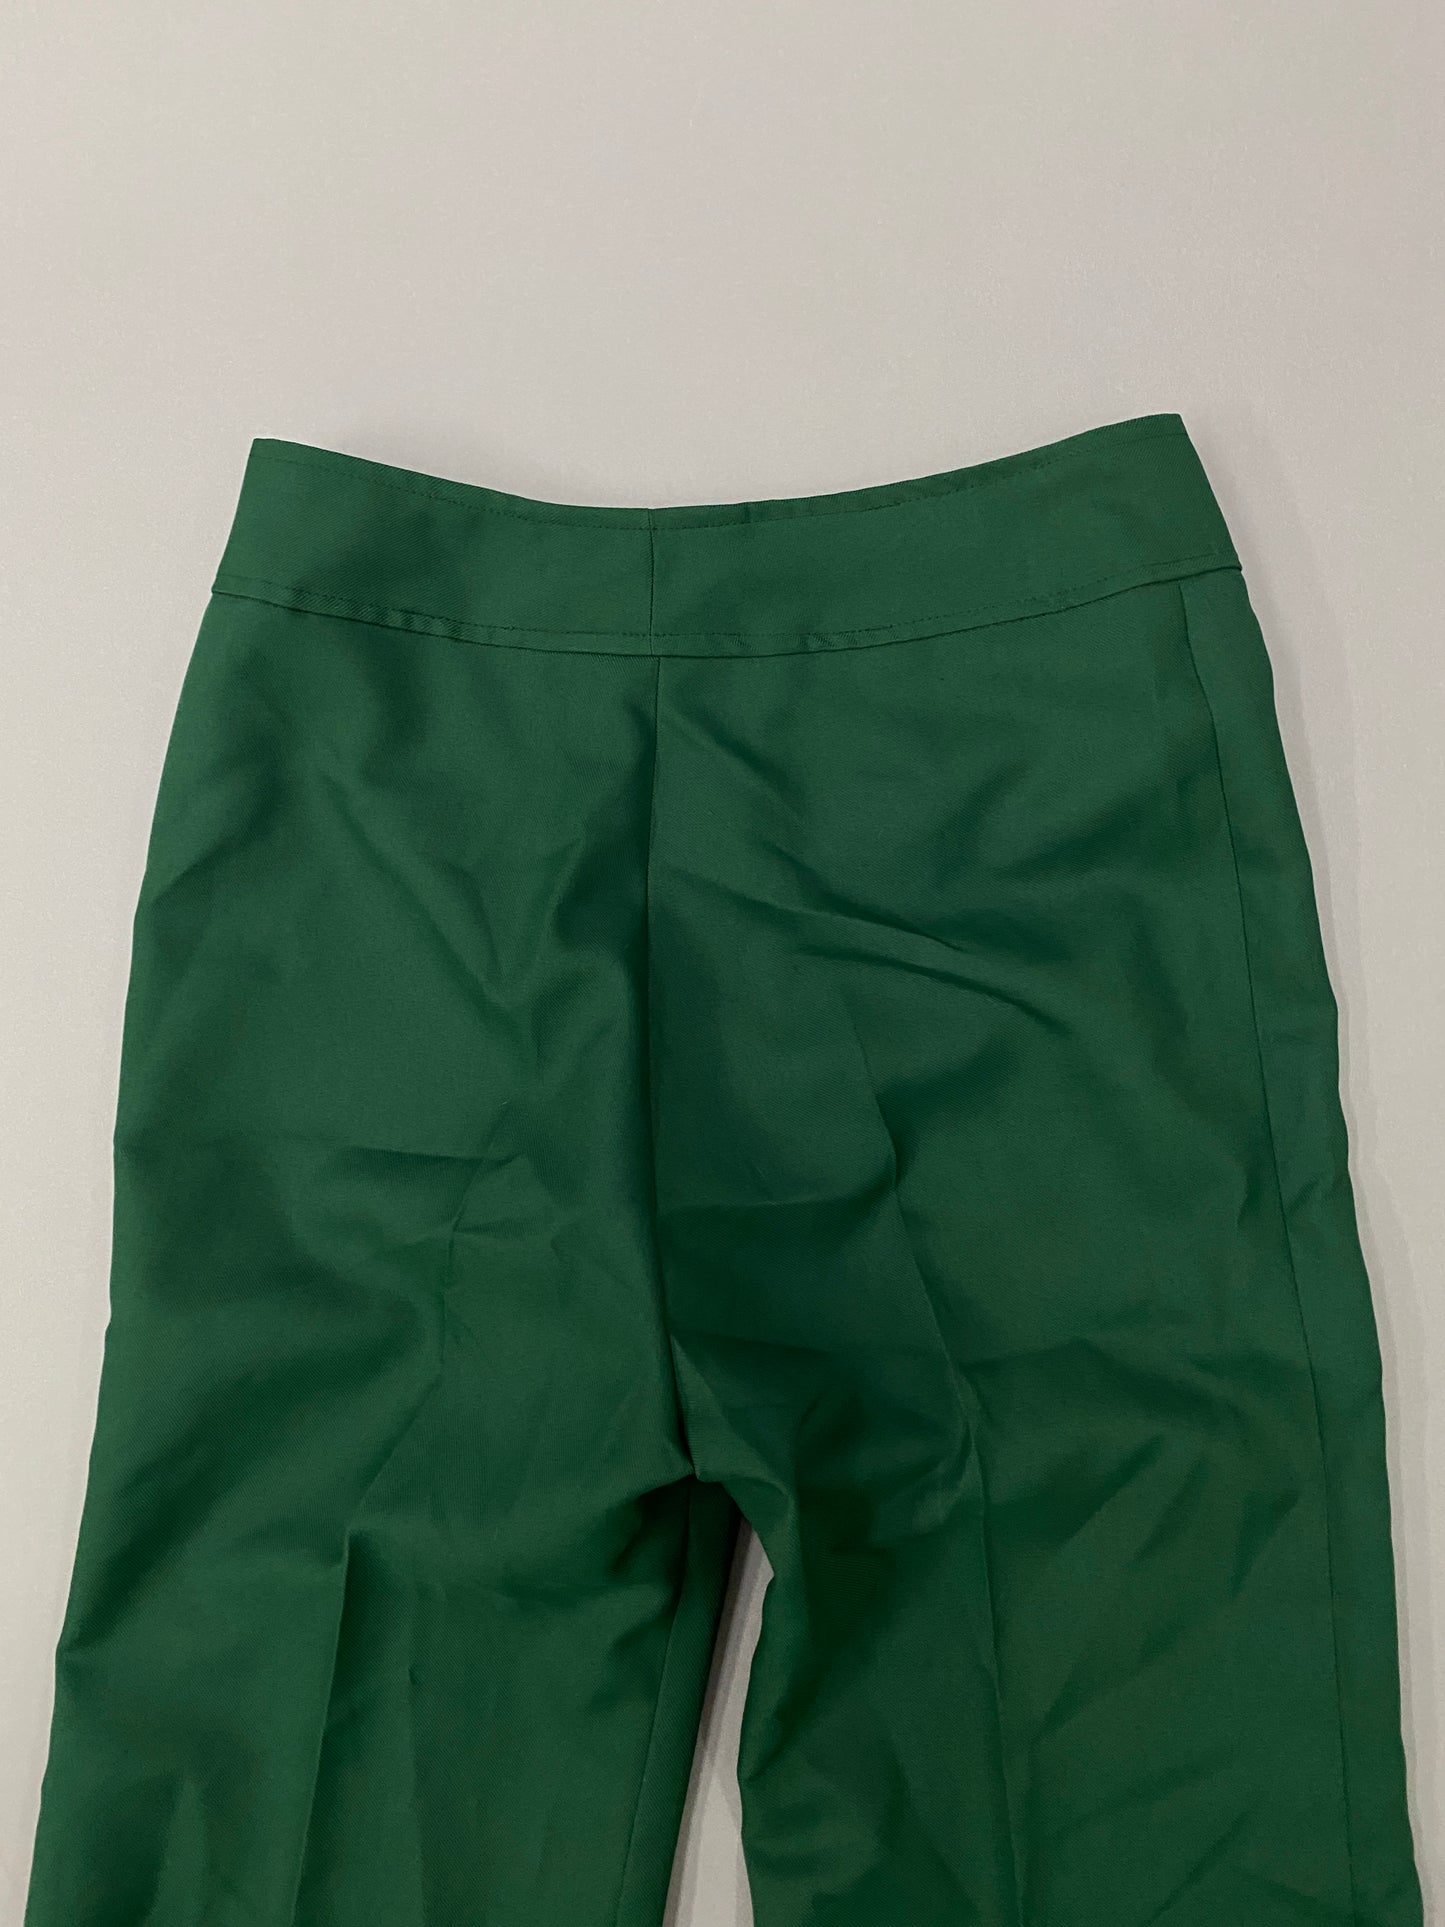 Vintage Green Pants